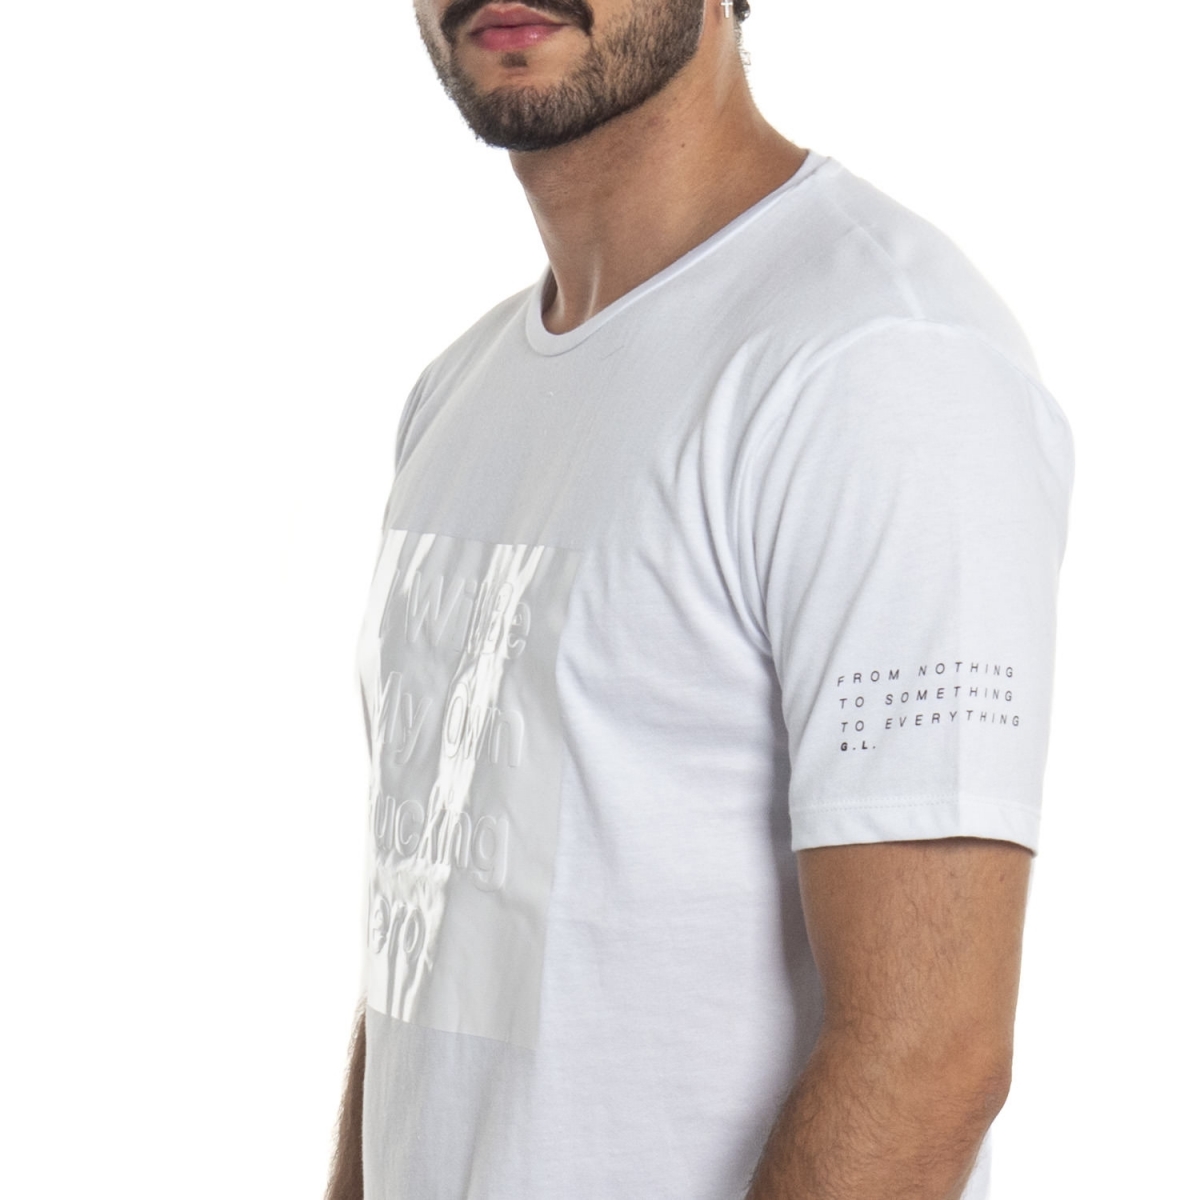 ropa Camiseta hombre T-Shirt GLPL1518 GIANNI LUPO Cafedelmar Shop